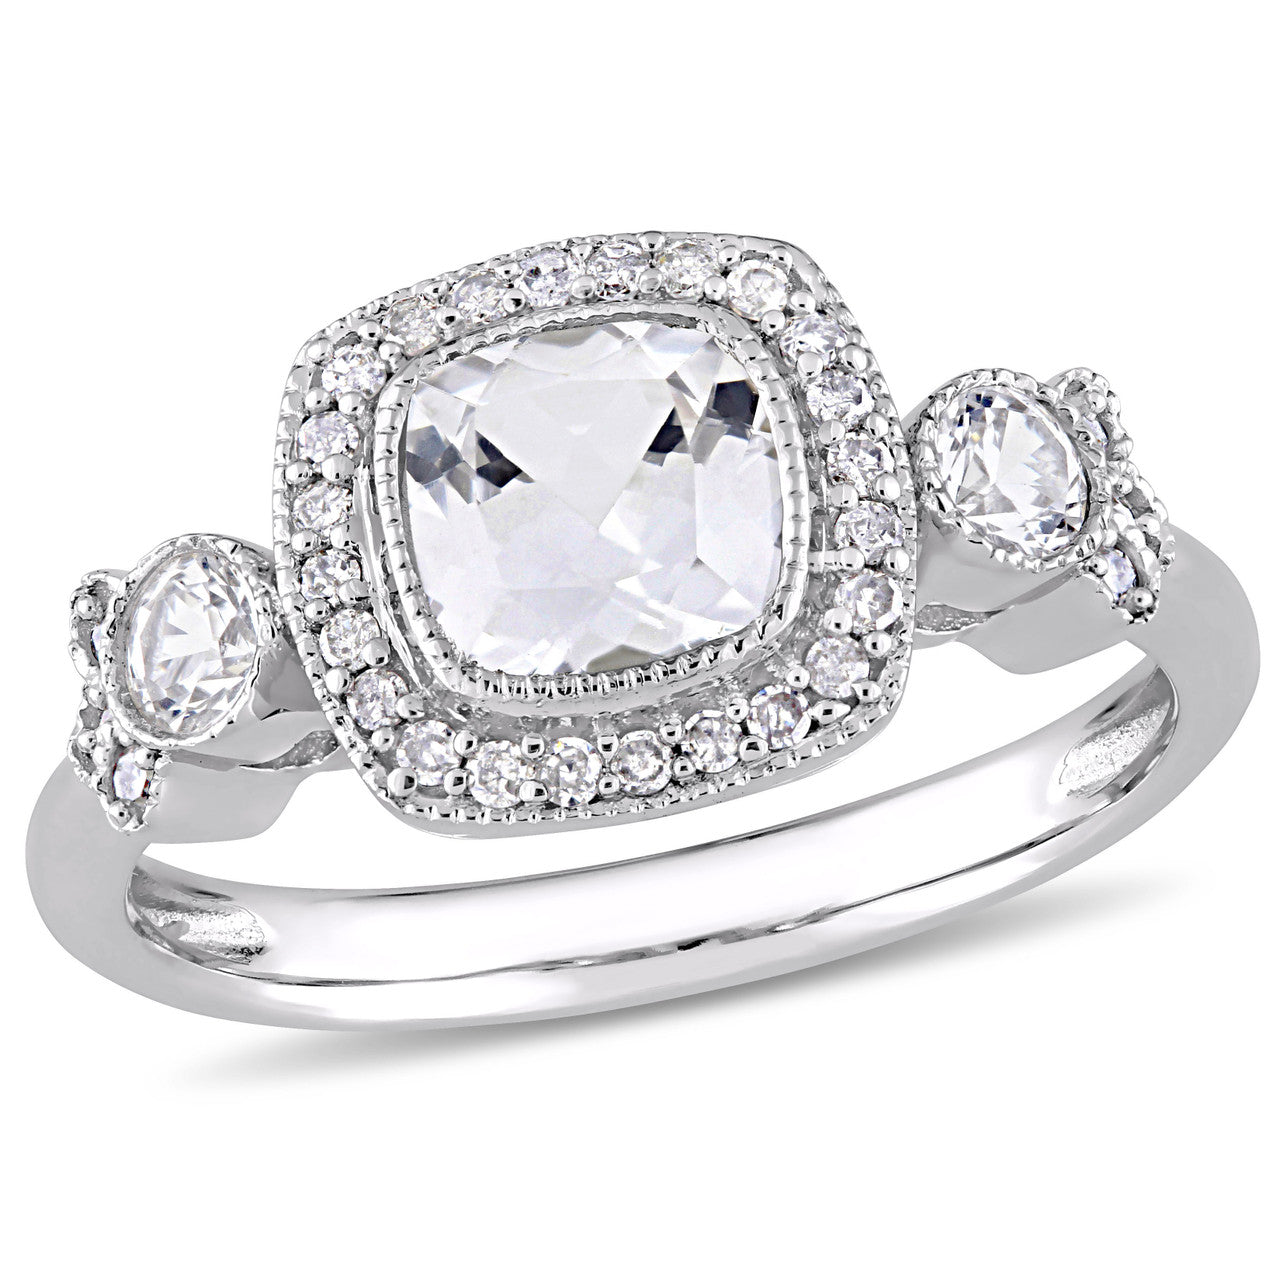 Ice Jewellery 1/6 CT Diamond TW and 1.54 CT TGW Created White Sapphire Ring in 10k White Gold - 75000004667 | Ice Jewellery Australia